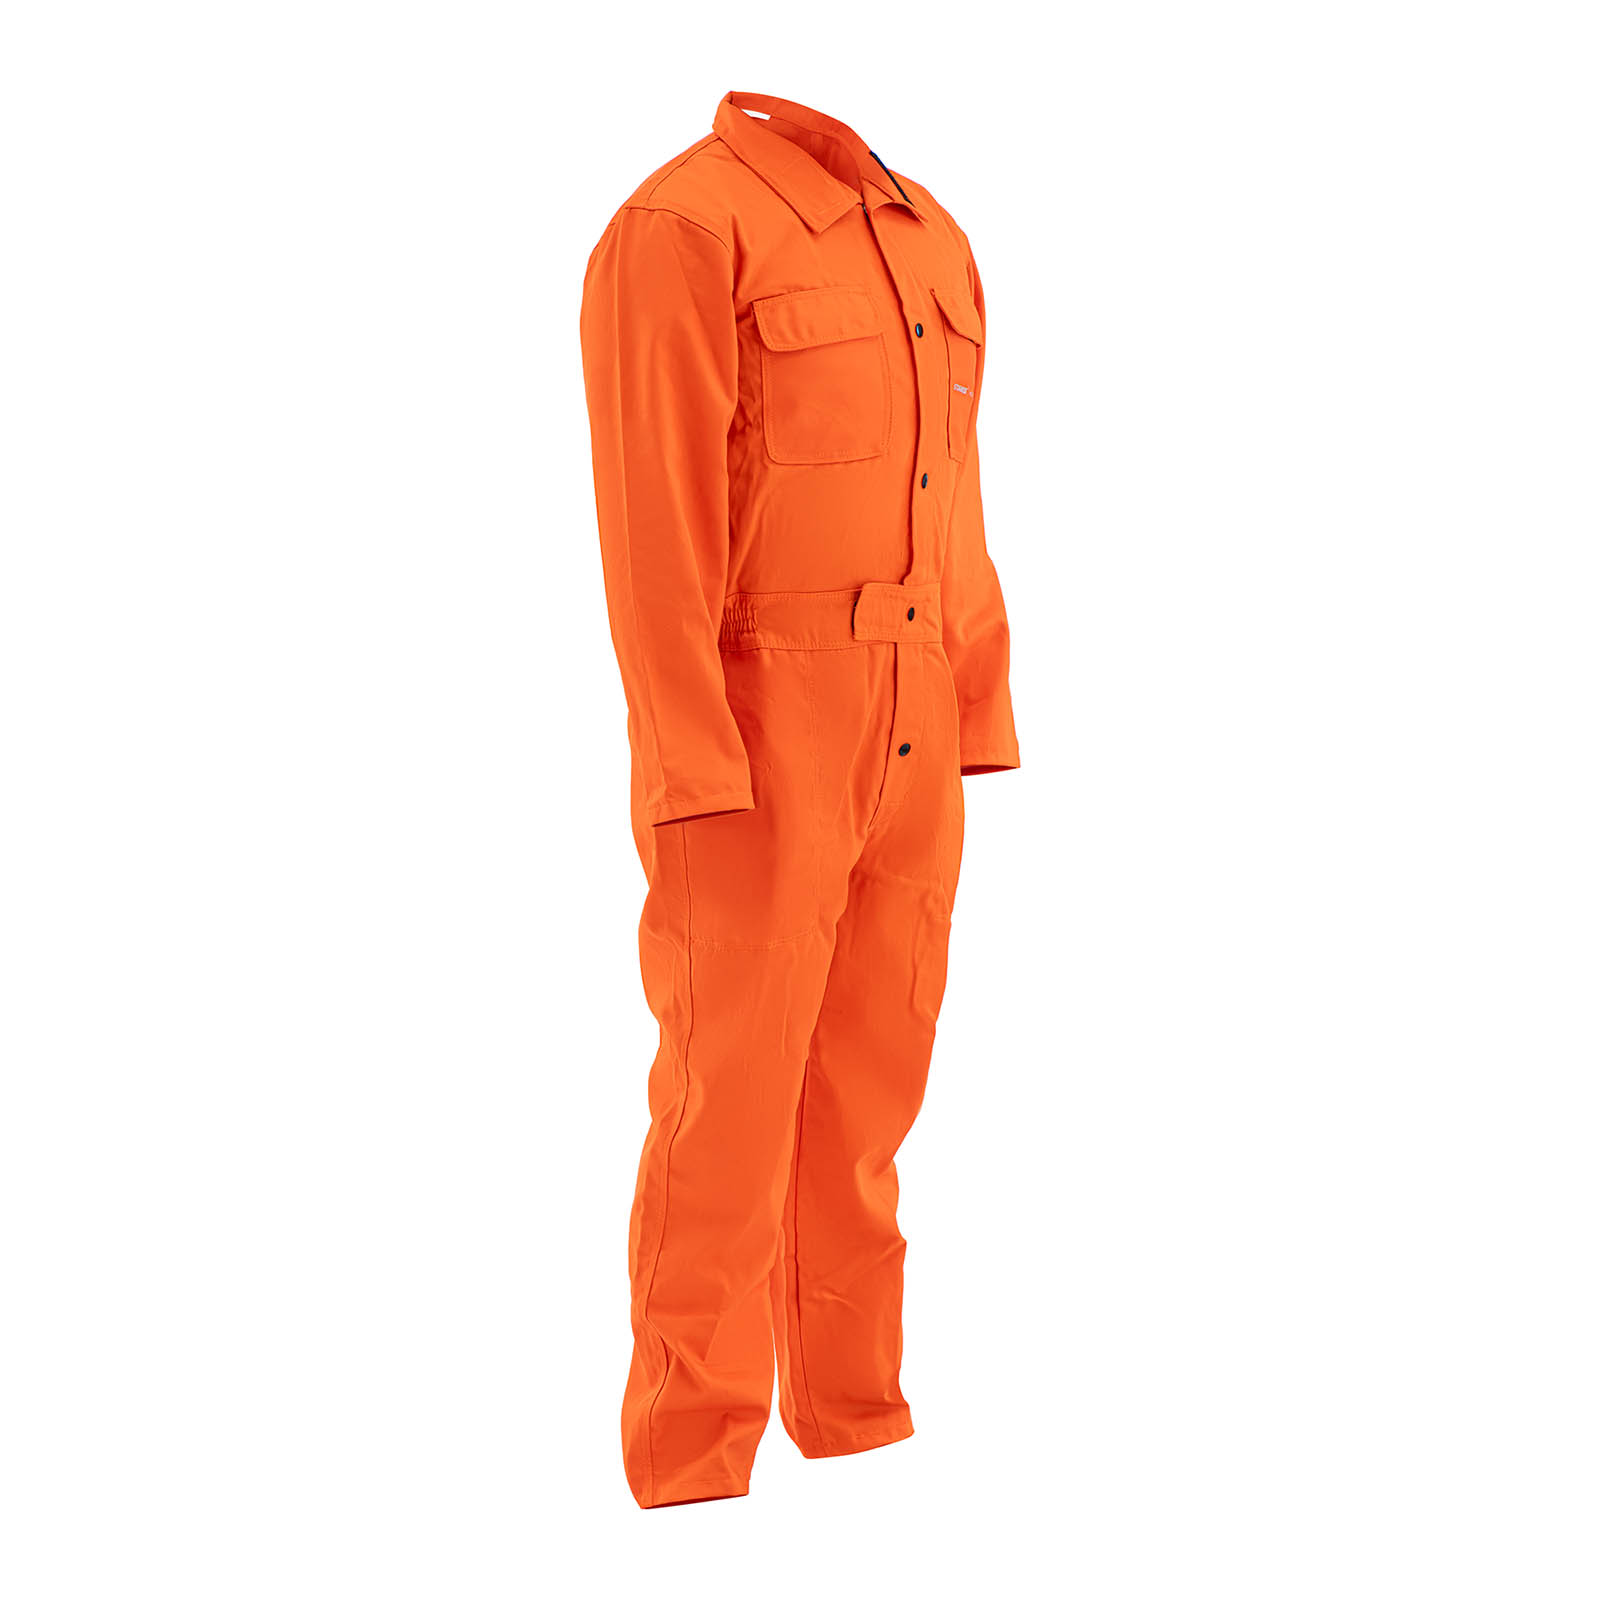 Welding Overalls - Size XL - Orange